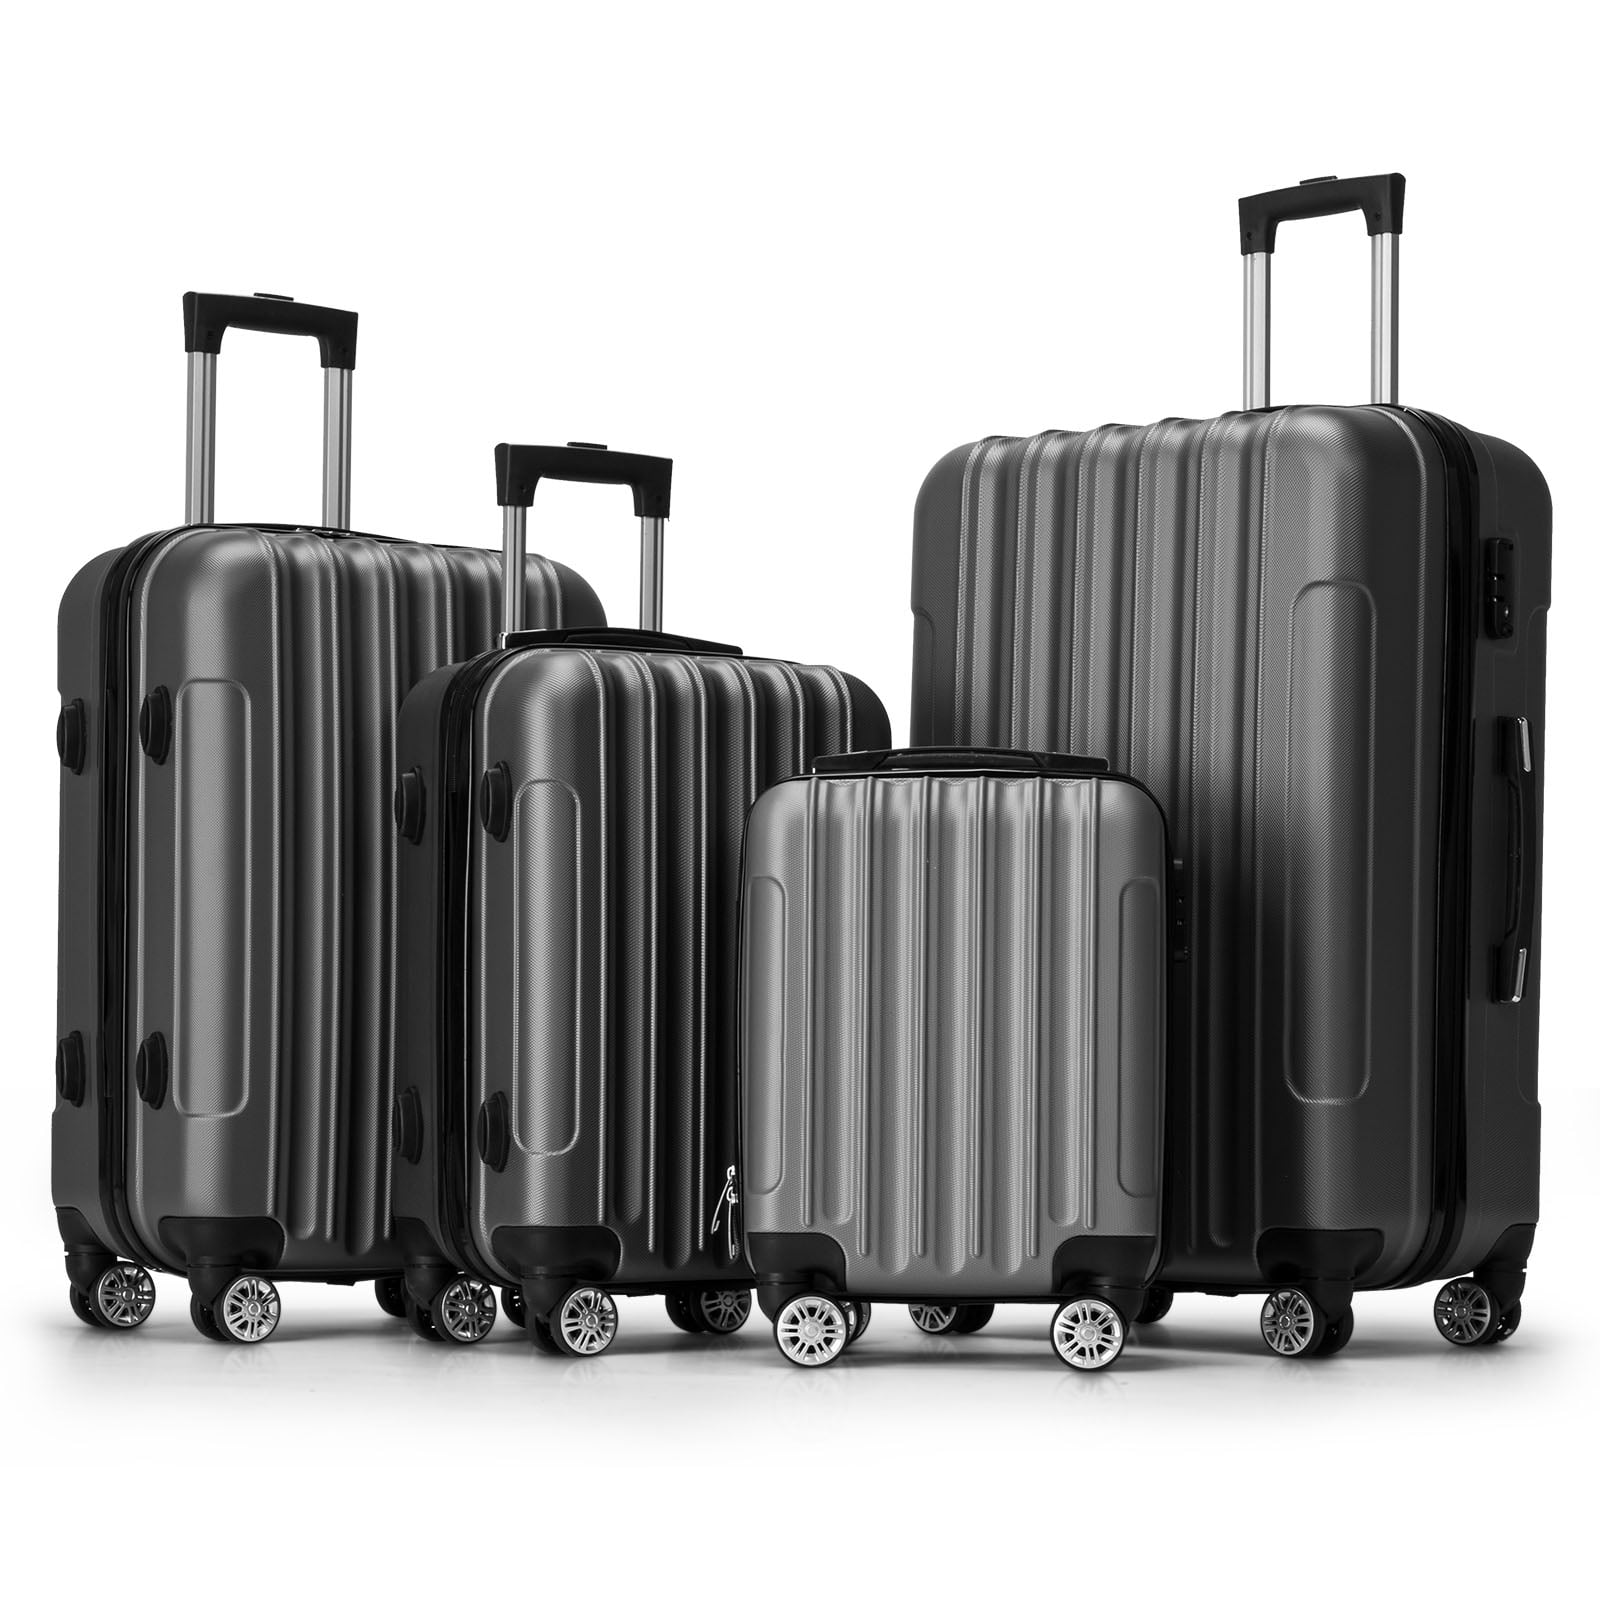 Zimtown 4 Piece ABS Hard Shell Luggage Set